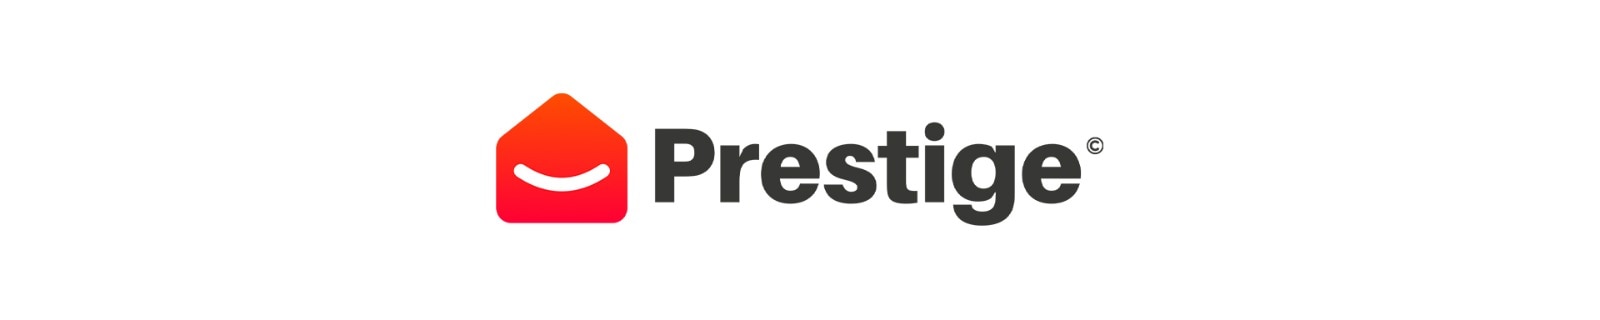 Prestige Home